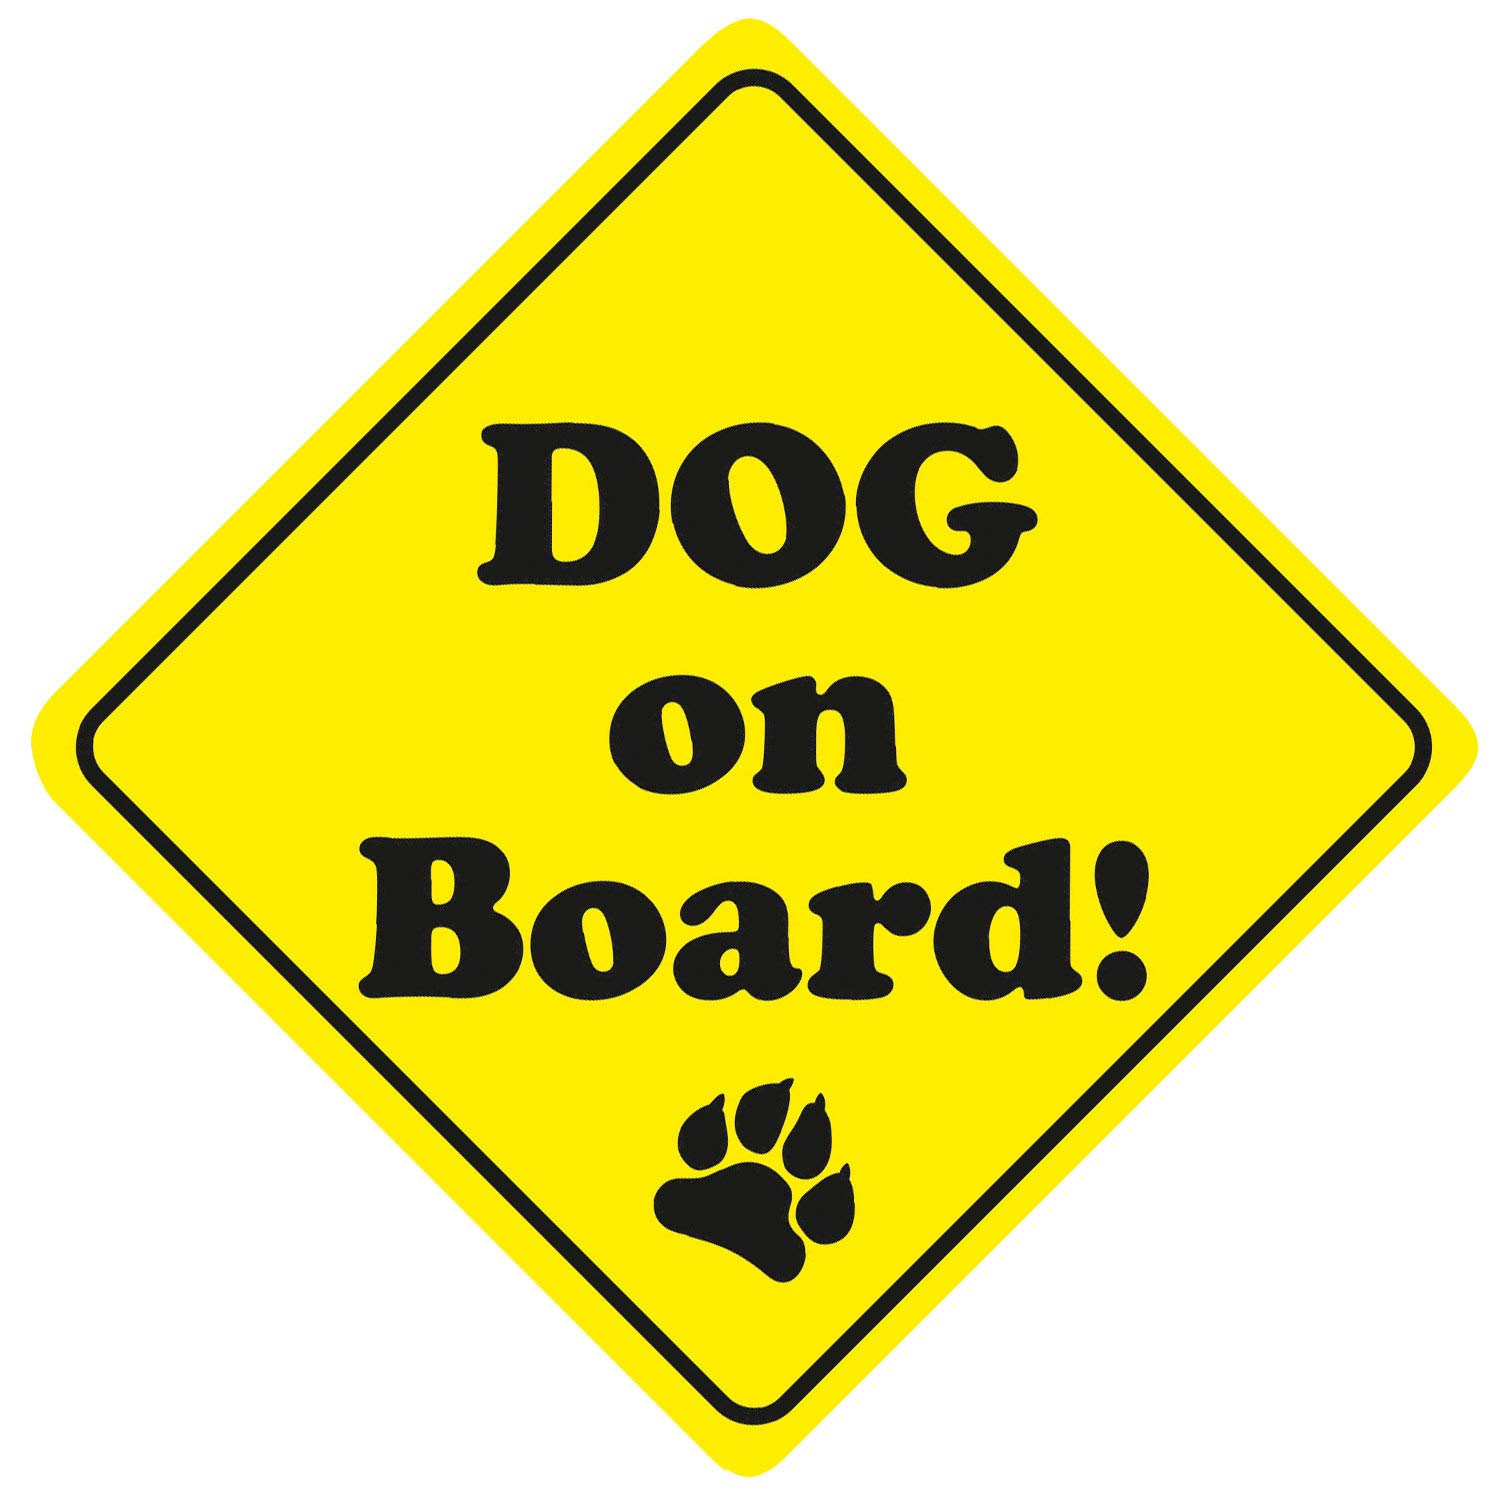 iSecur Auto-Aufkleber Dog on Board I 11 cm hoch I Hundeaufkleber I Sticker für Hunde-Besitzer I wetterfest I kfz_317 von iSecur